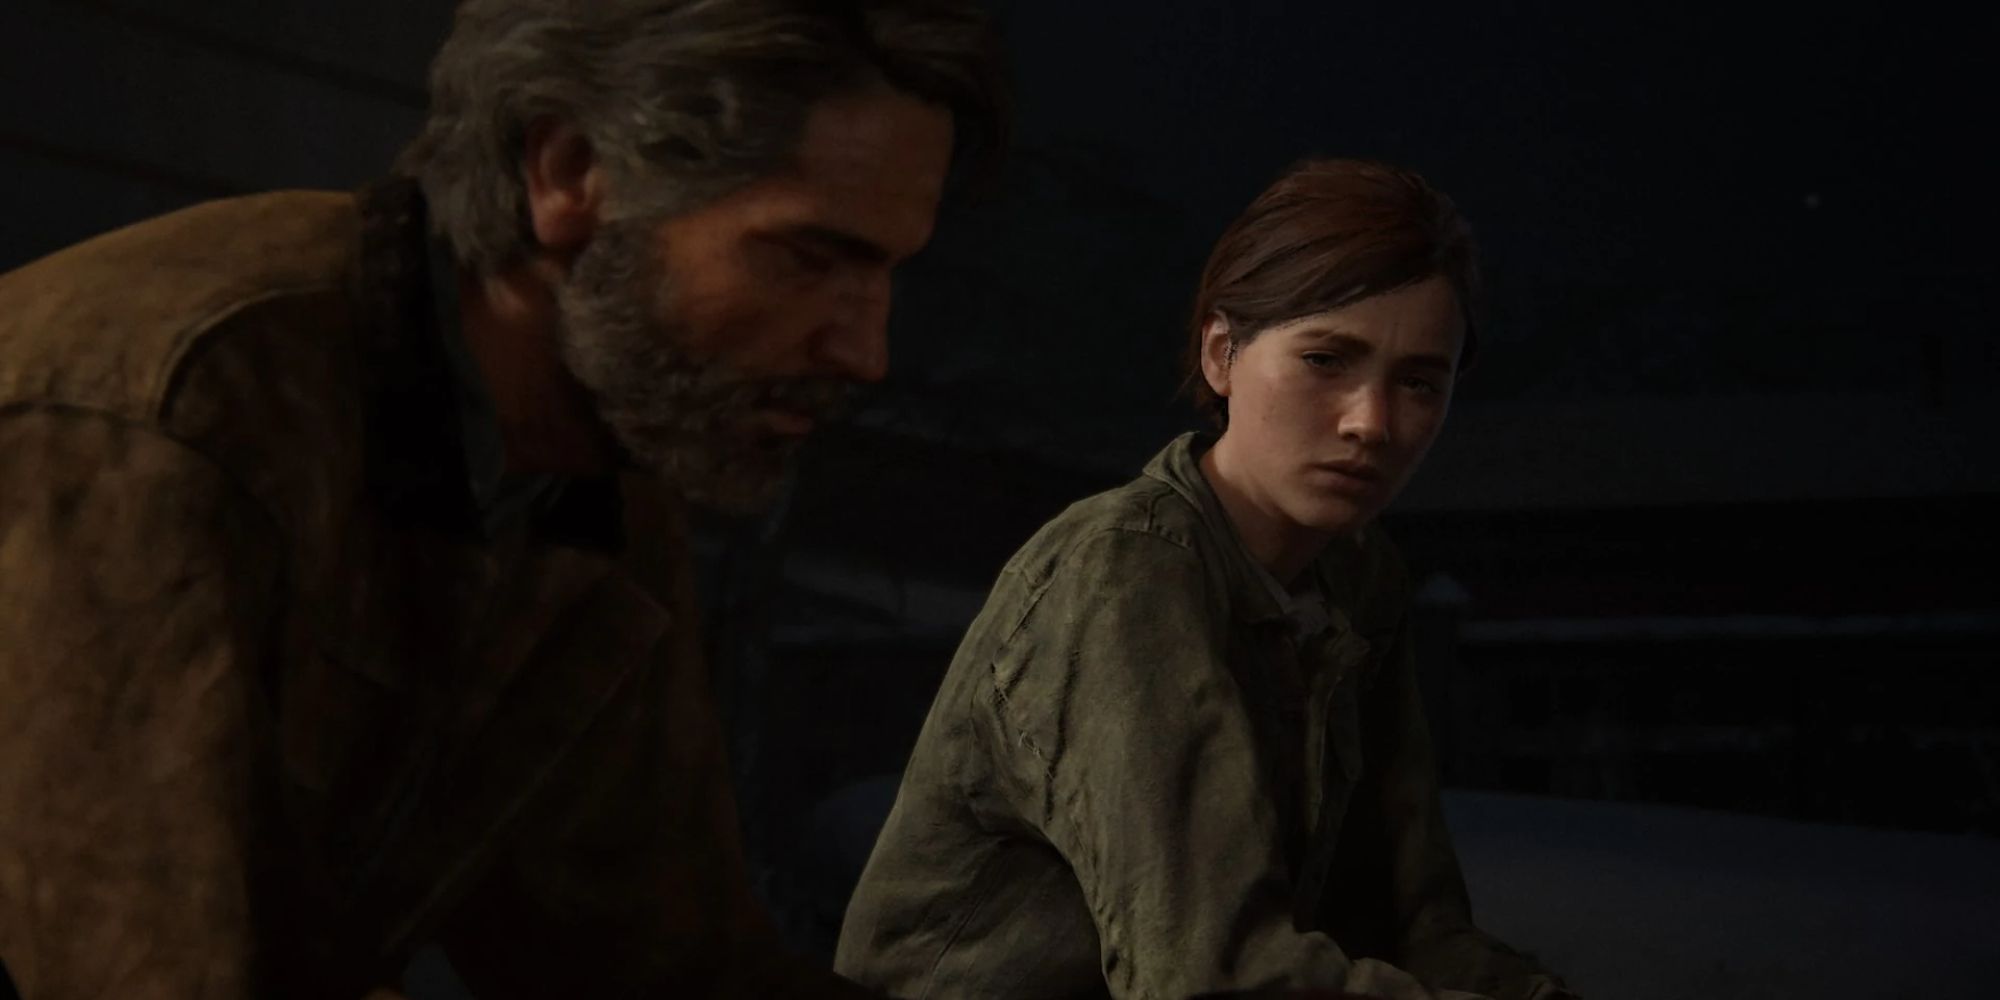 Joel and Ellie having their last conversation in The Last of Us Part 2